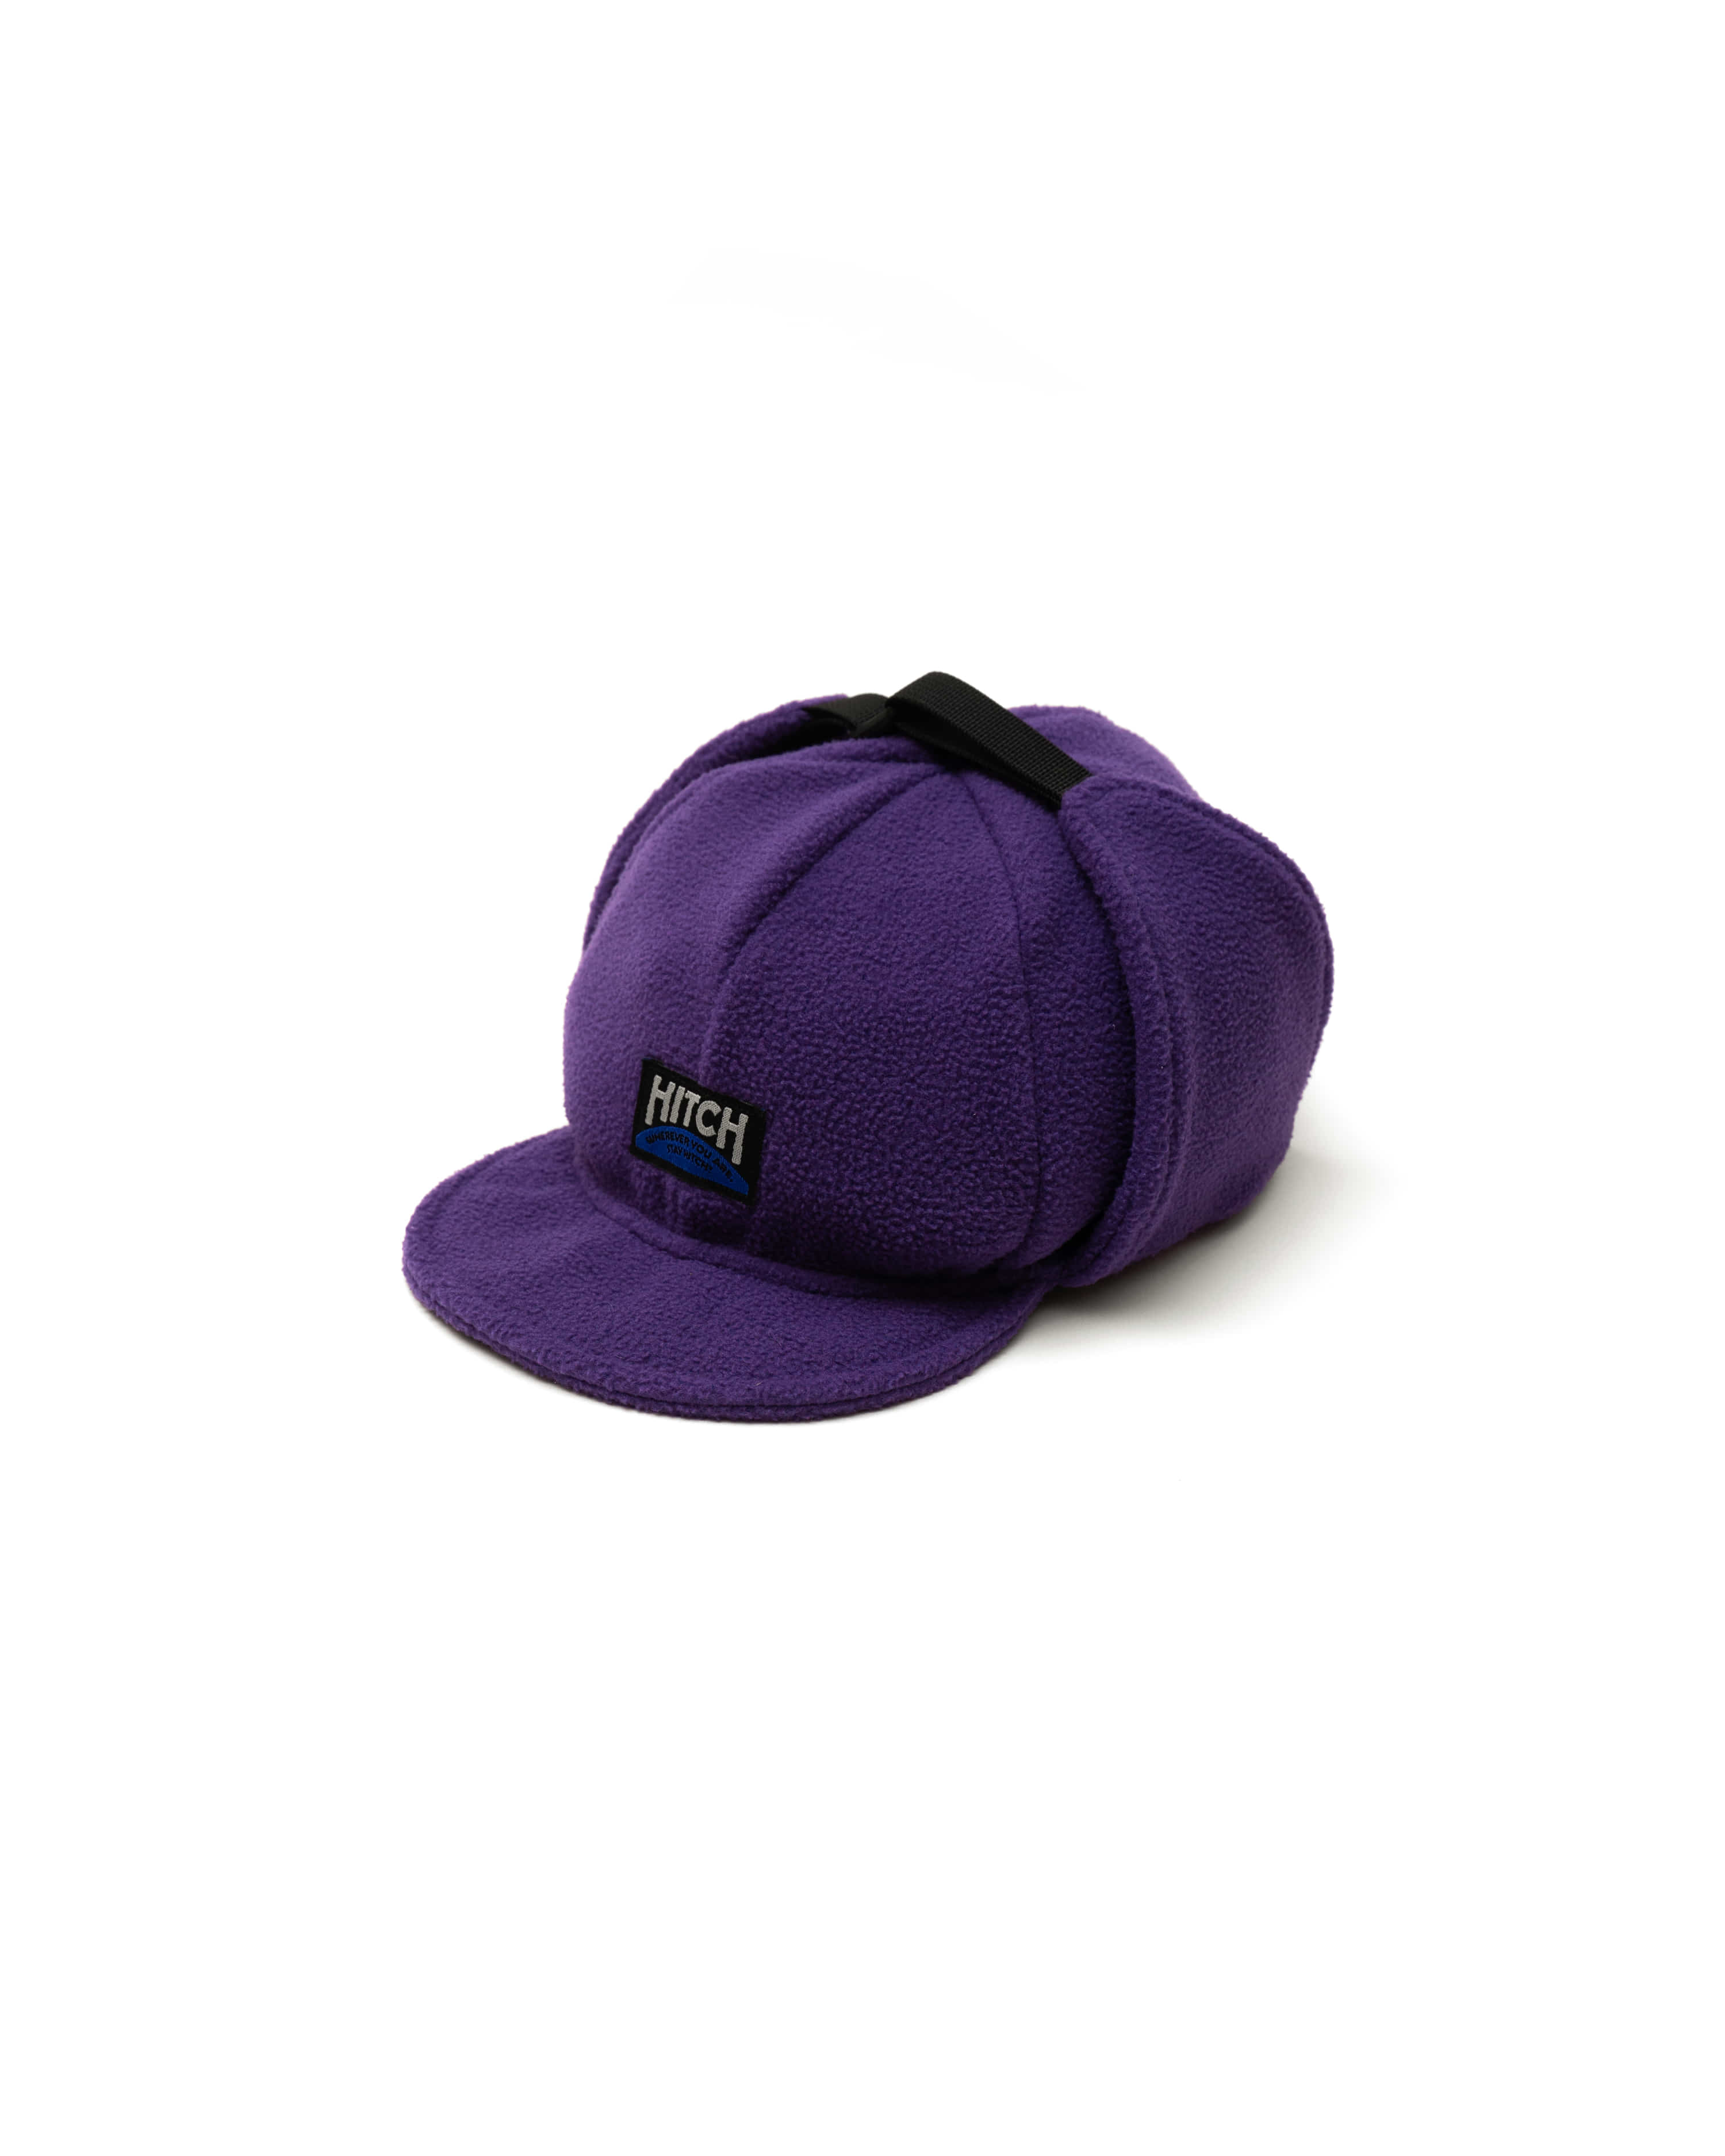 [out of stock] Basecamp - Purple (Fleece)